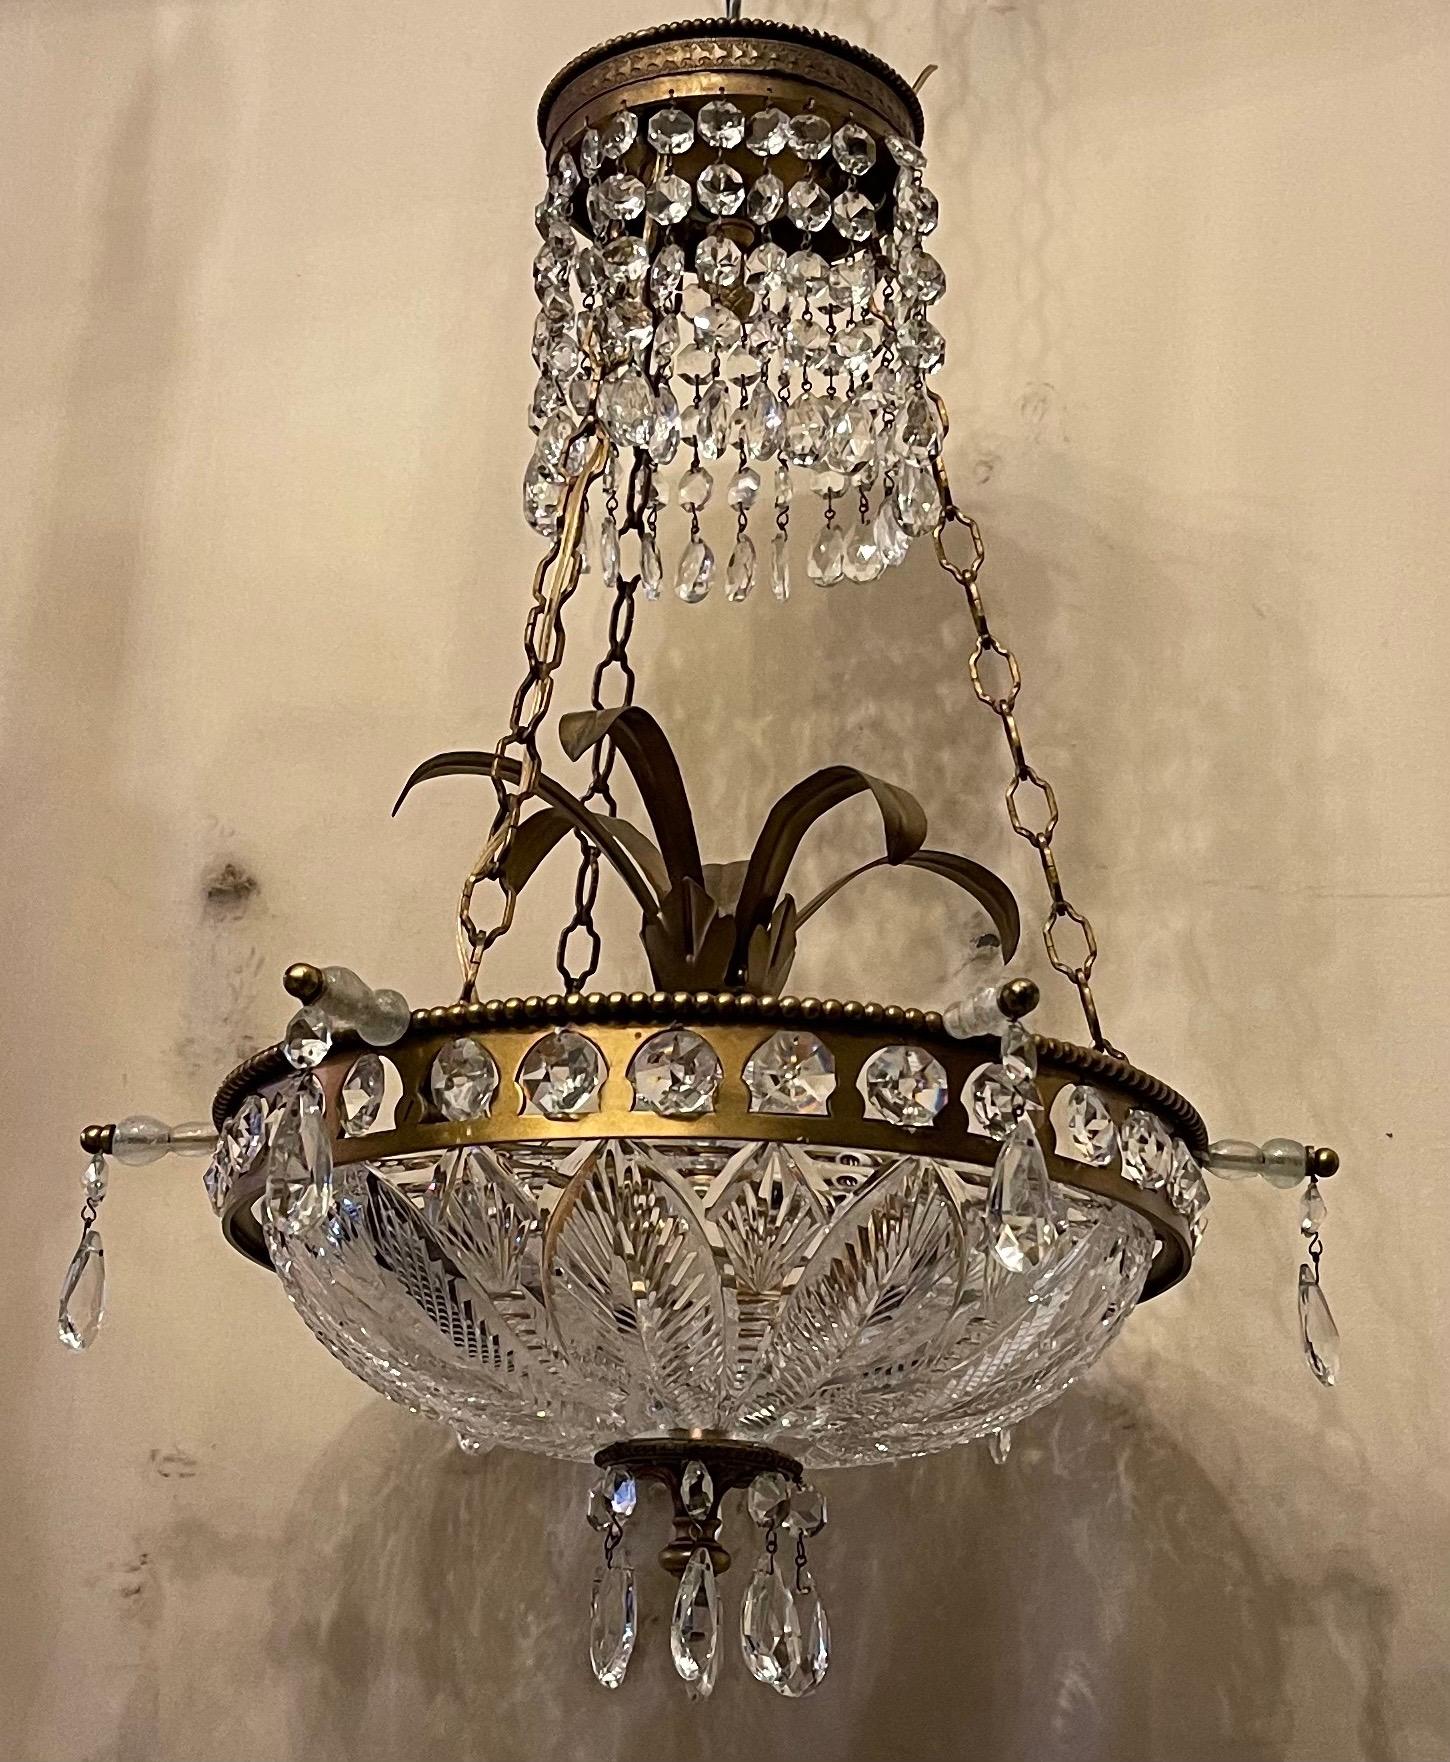 Regency Wonderful Neoclassical Etched Cut-Crystal Bowl Bronze Chandelier Ormolu Fixture For Sale